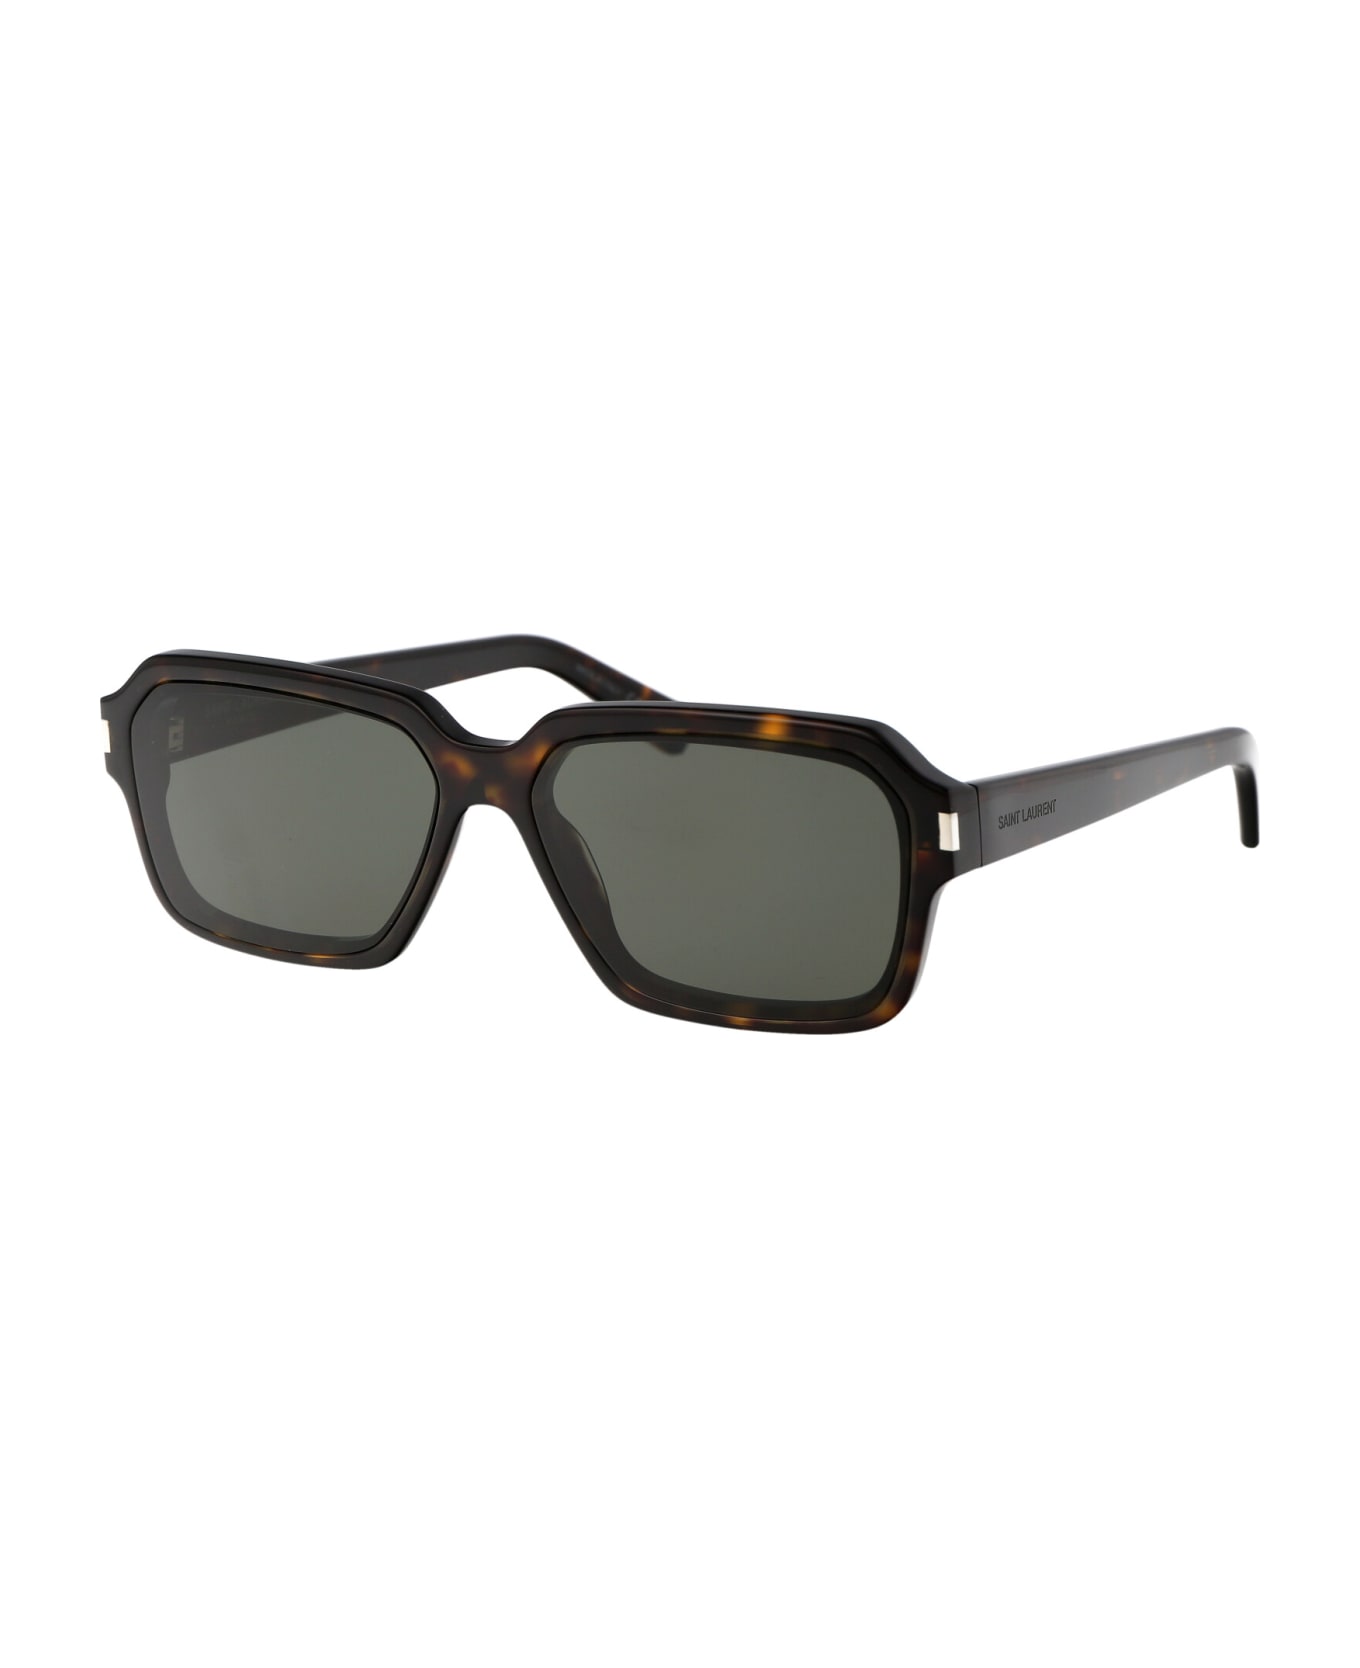 Saint Laurent Eyewear Sl 611 Sunglasses - 002 HAVANA HAVANA GREY